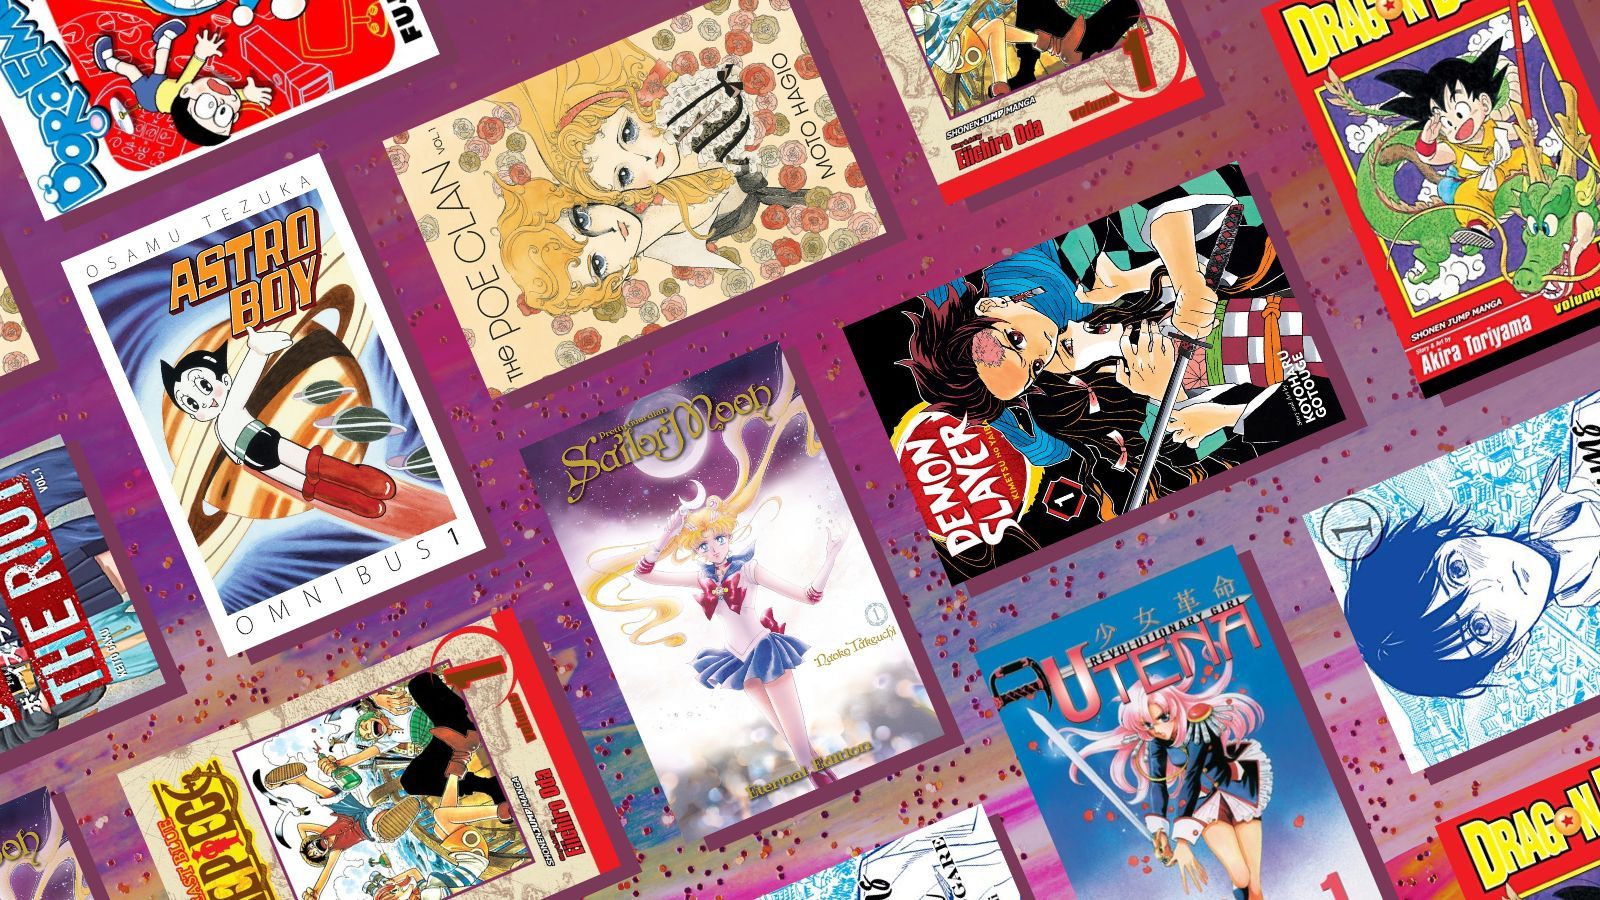 Manga Like Yuu Watase Best Selection